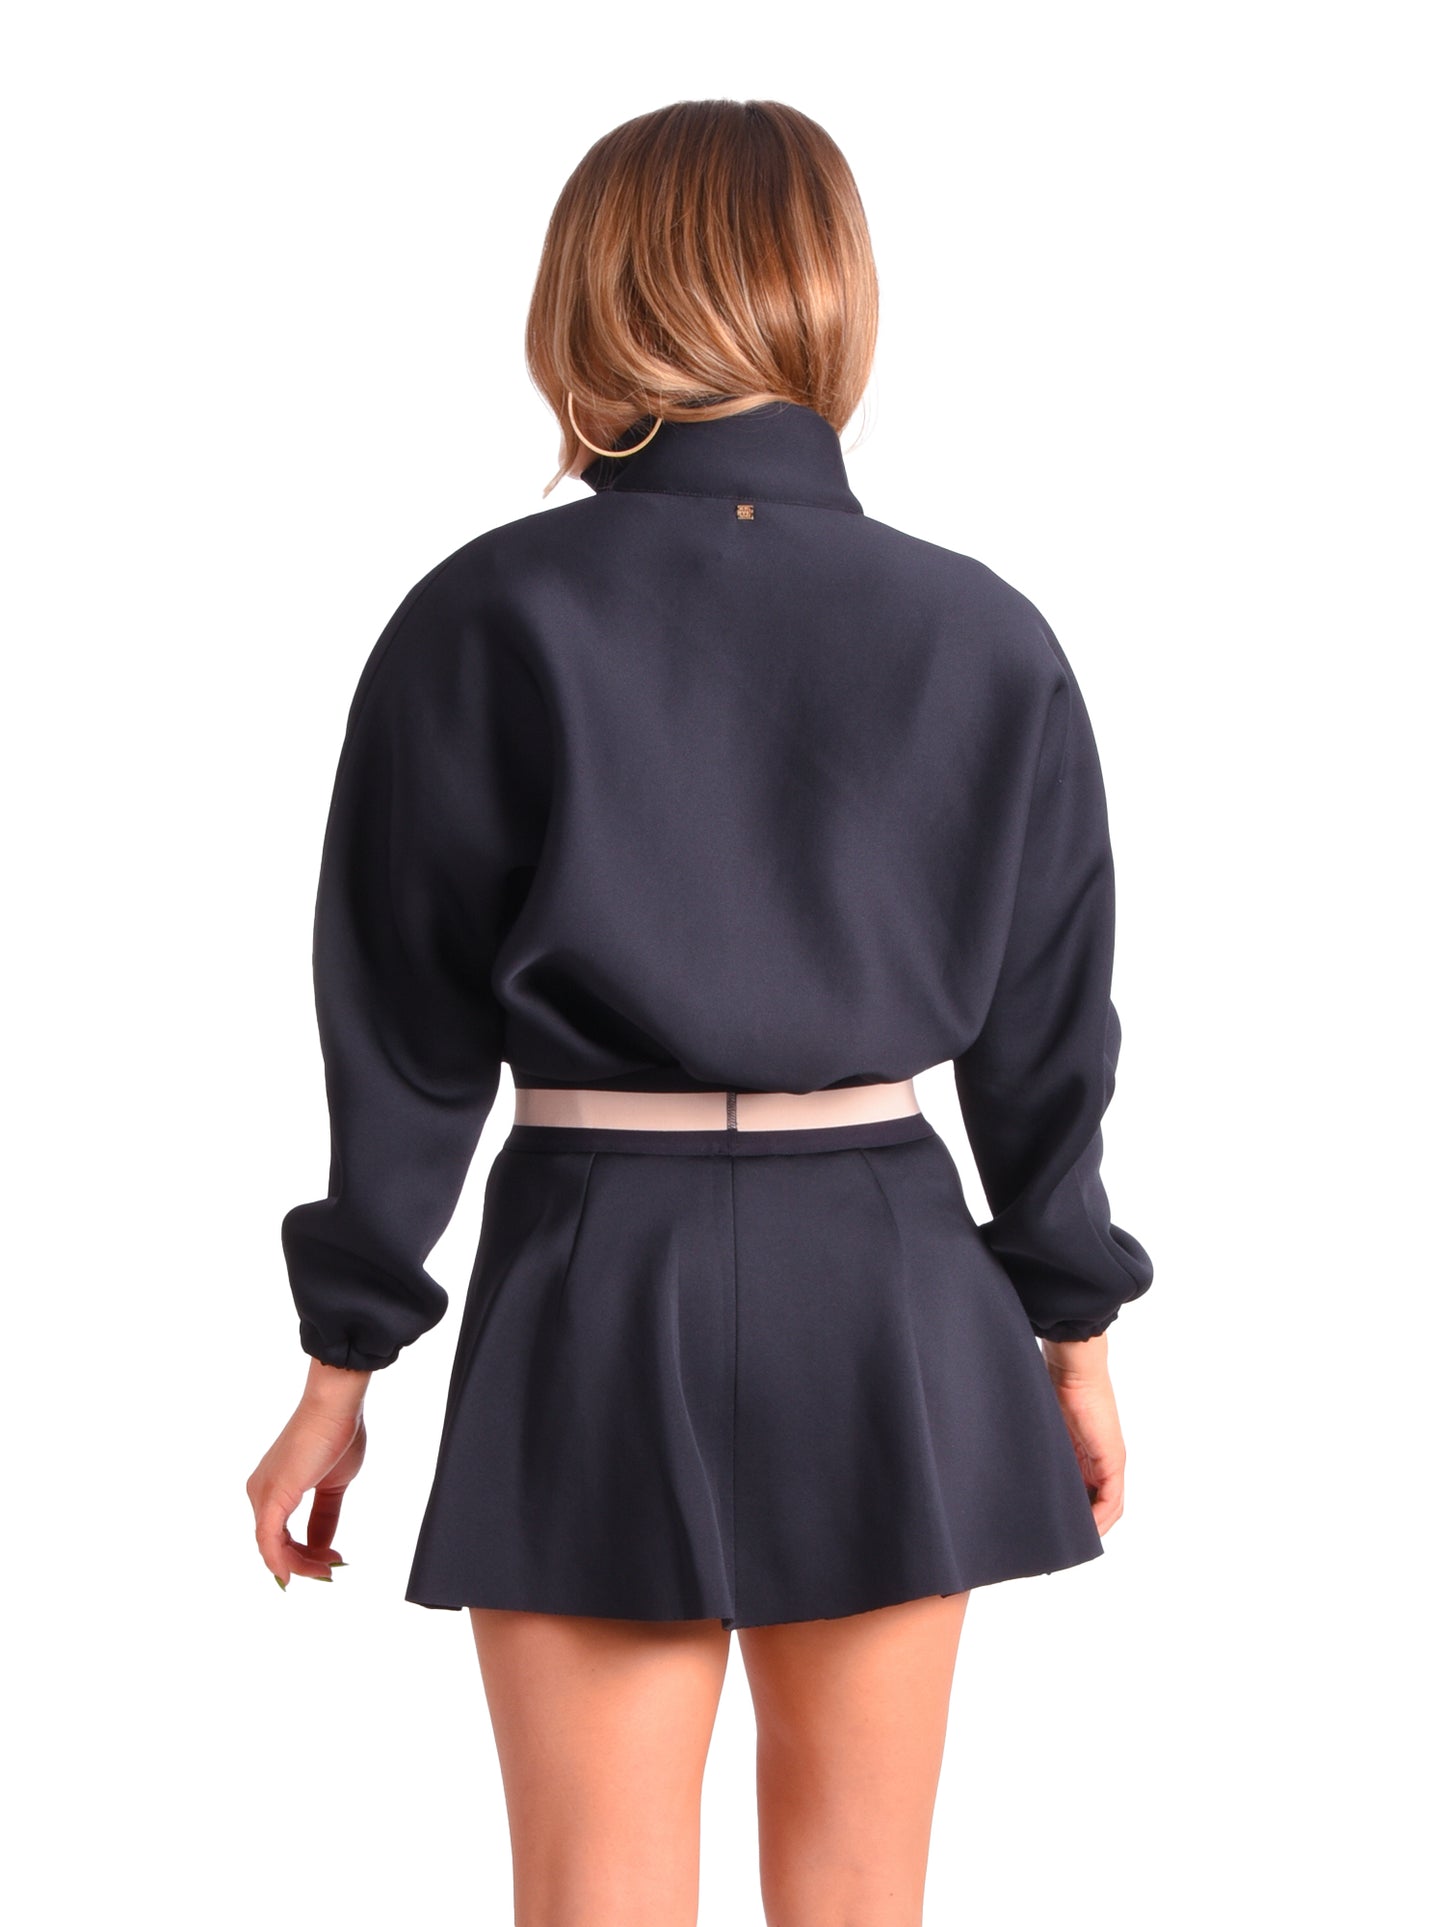 Sydney Skirt - Noir